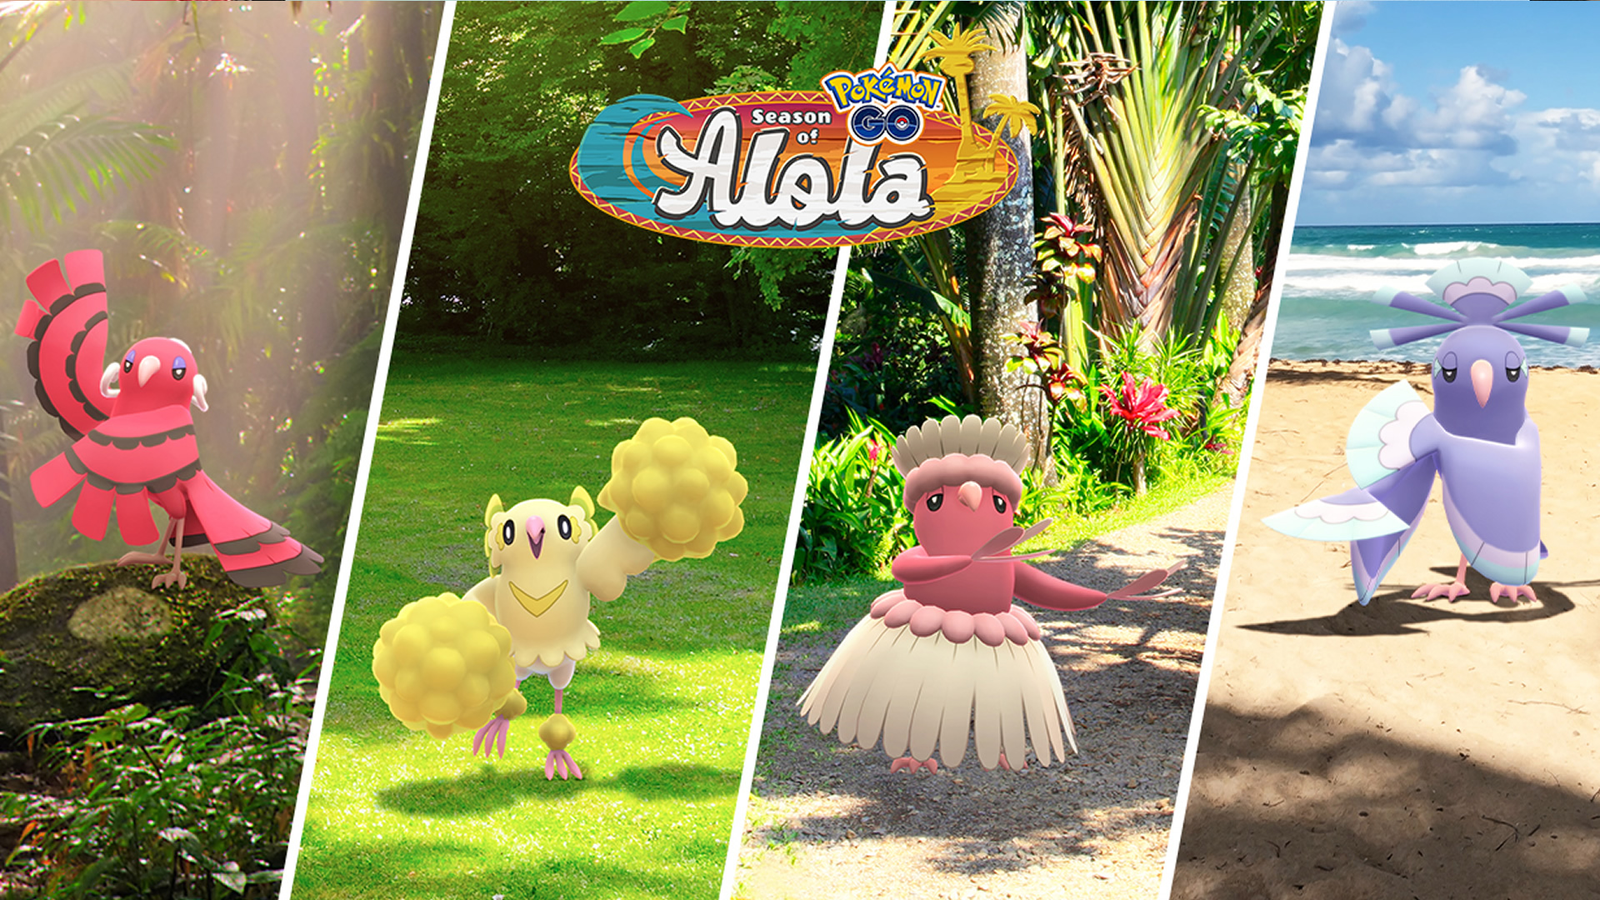 Season of Alola - Pokémon GO 